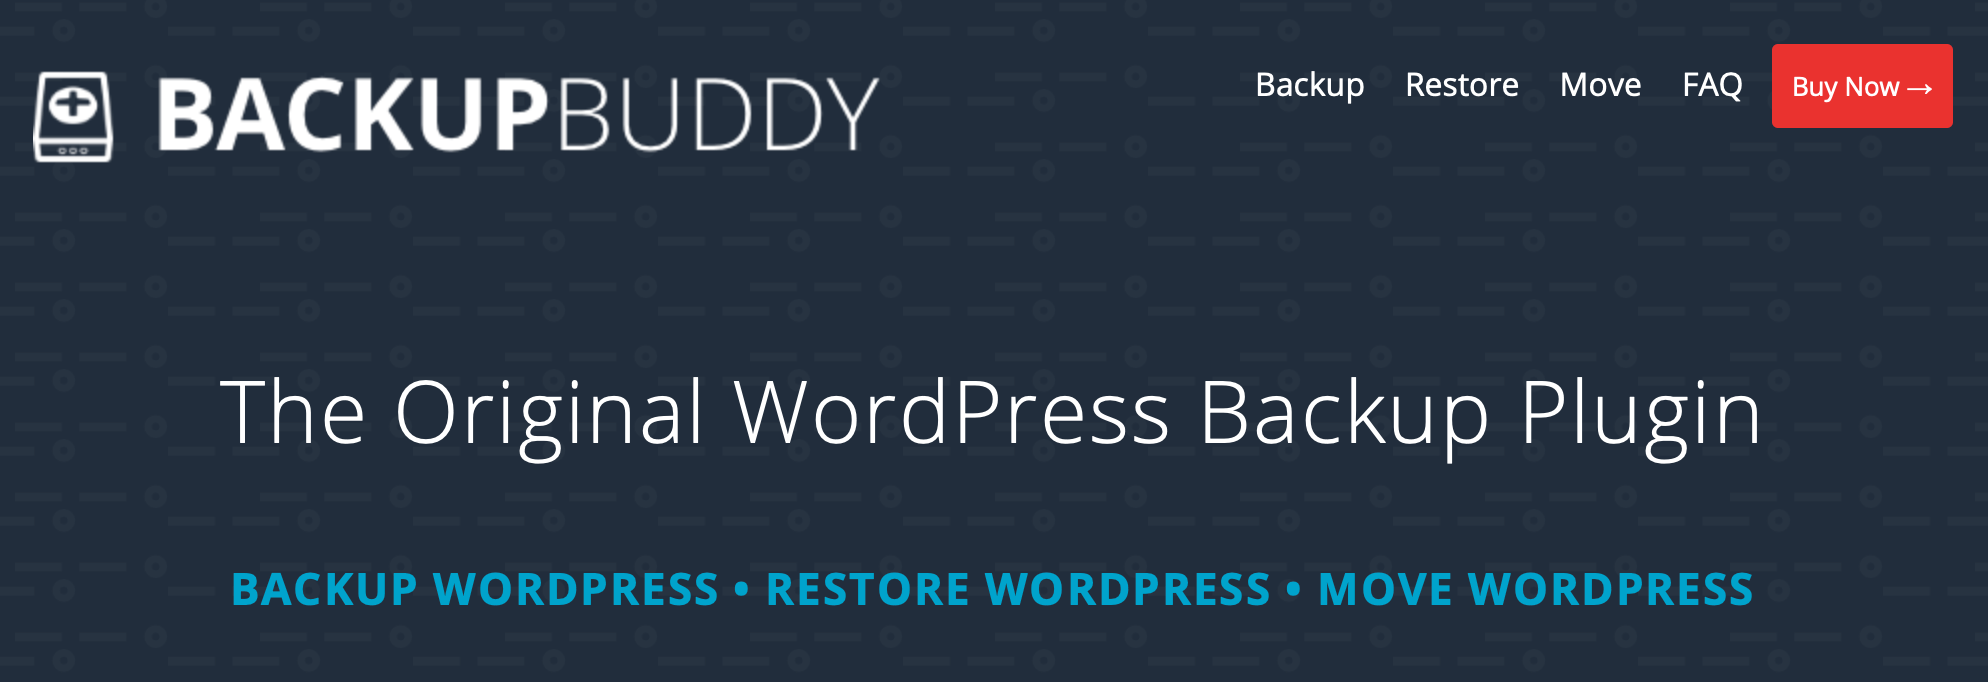 BackupBuddy是VaultPress的最佳替代产品之一。“ width =” 1988“ height =” 682